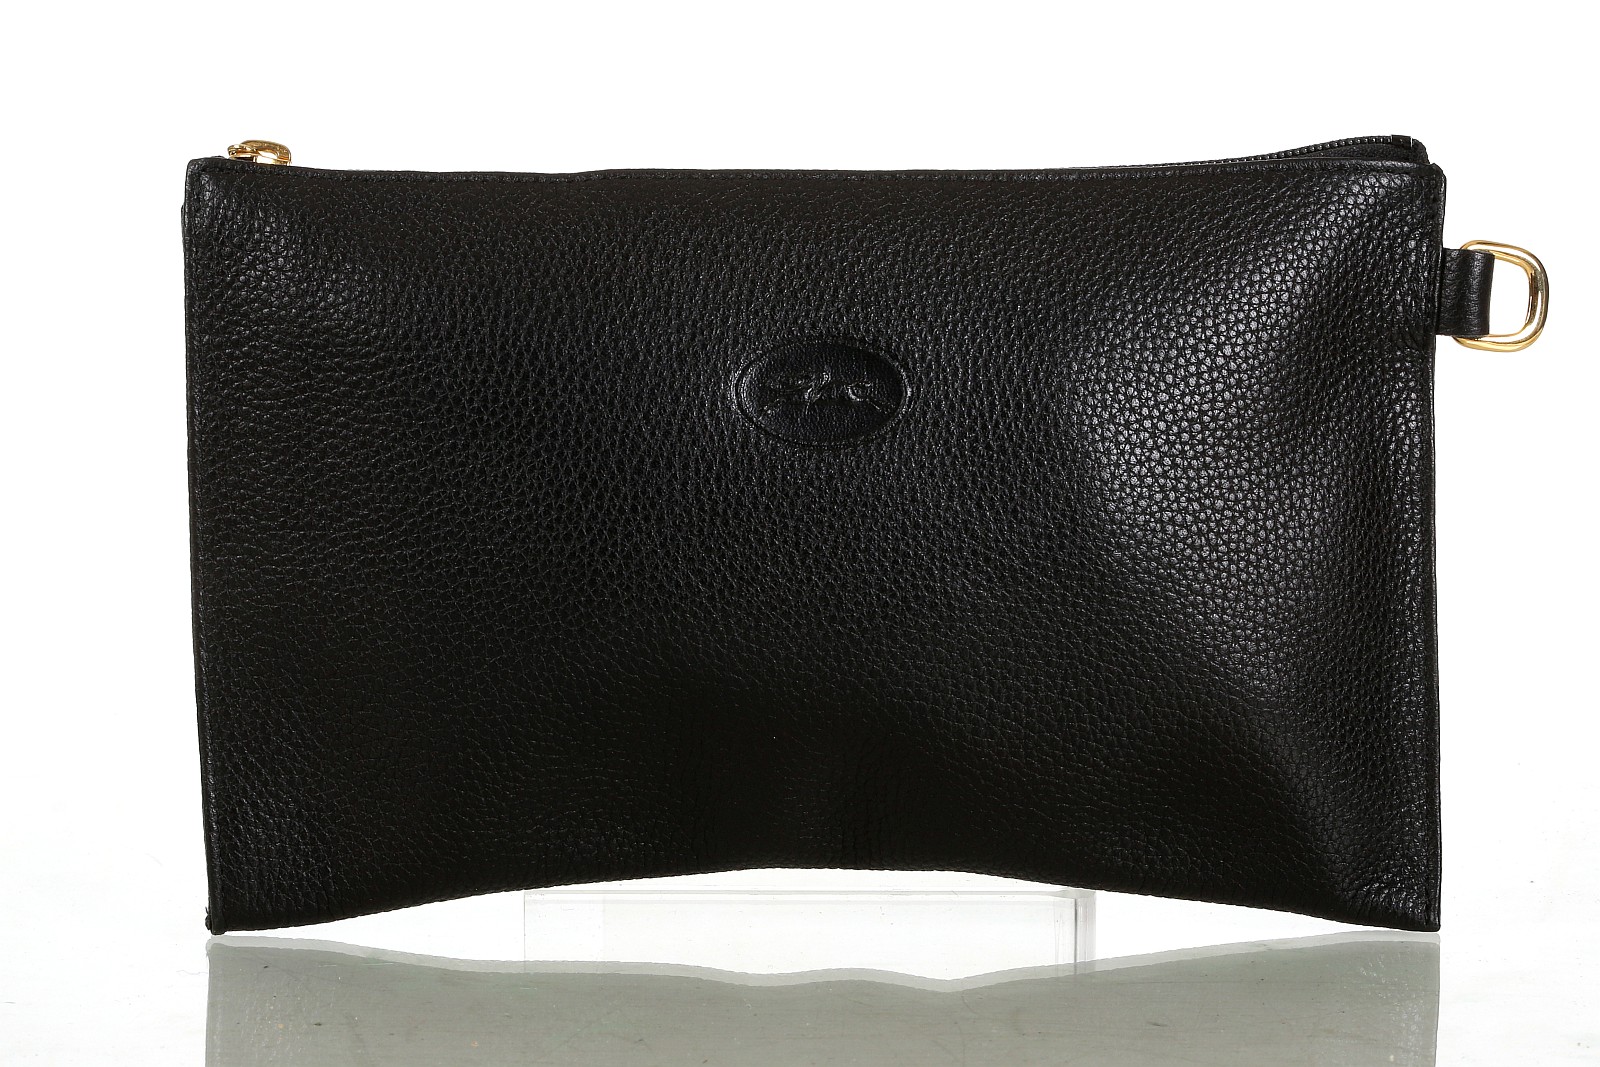 DKNY MINI BACKPACK, black leather, 23cm high, 17cm - Image 4 of 5